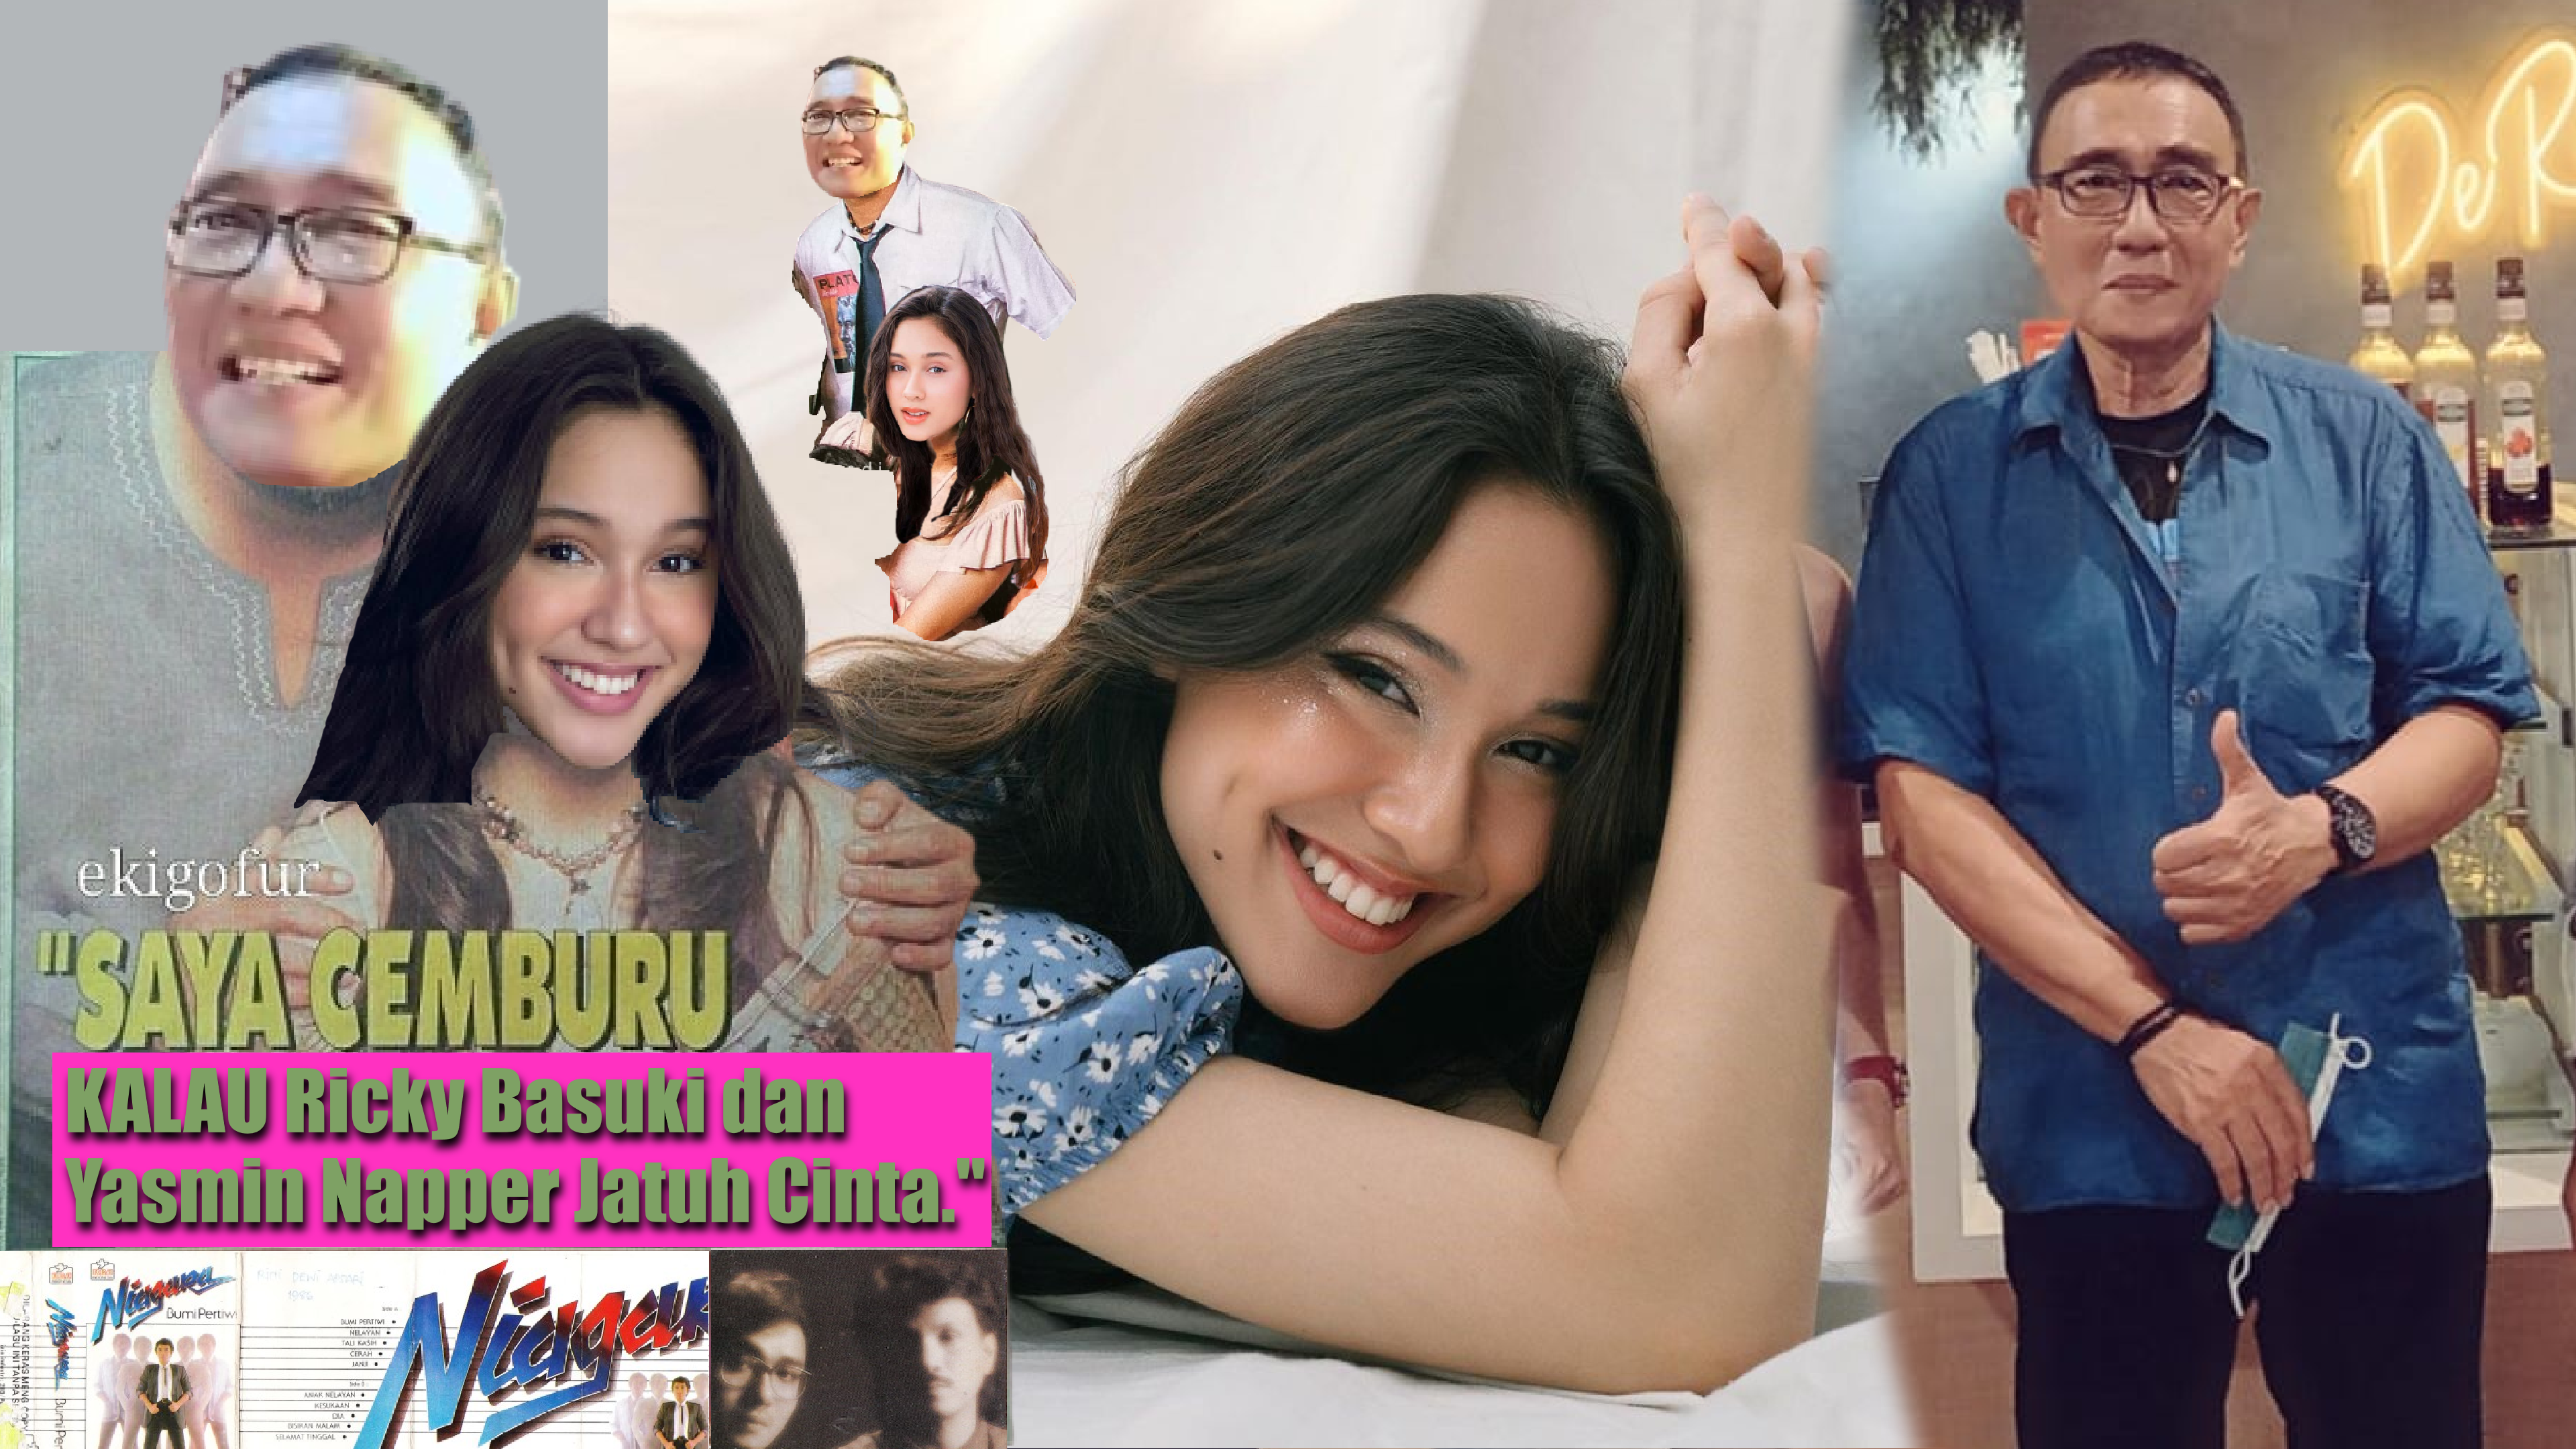 Yasmin Napper dan Ricky Basuki Versi Sinetron Majalah Parodi